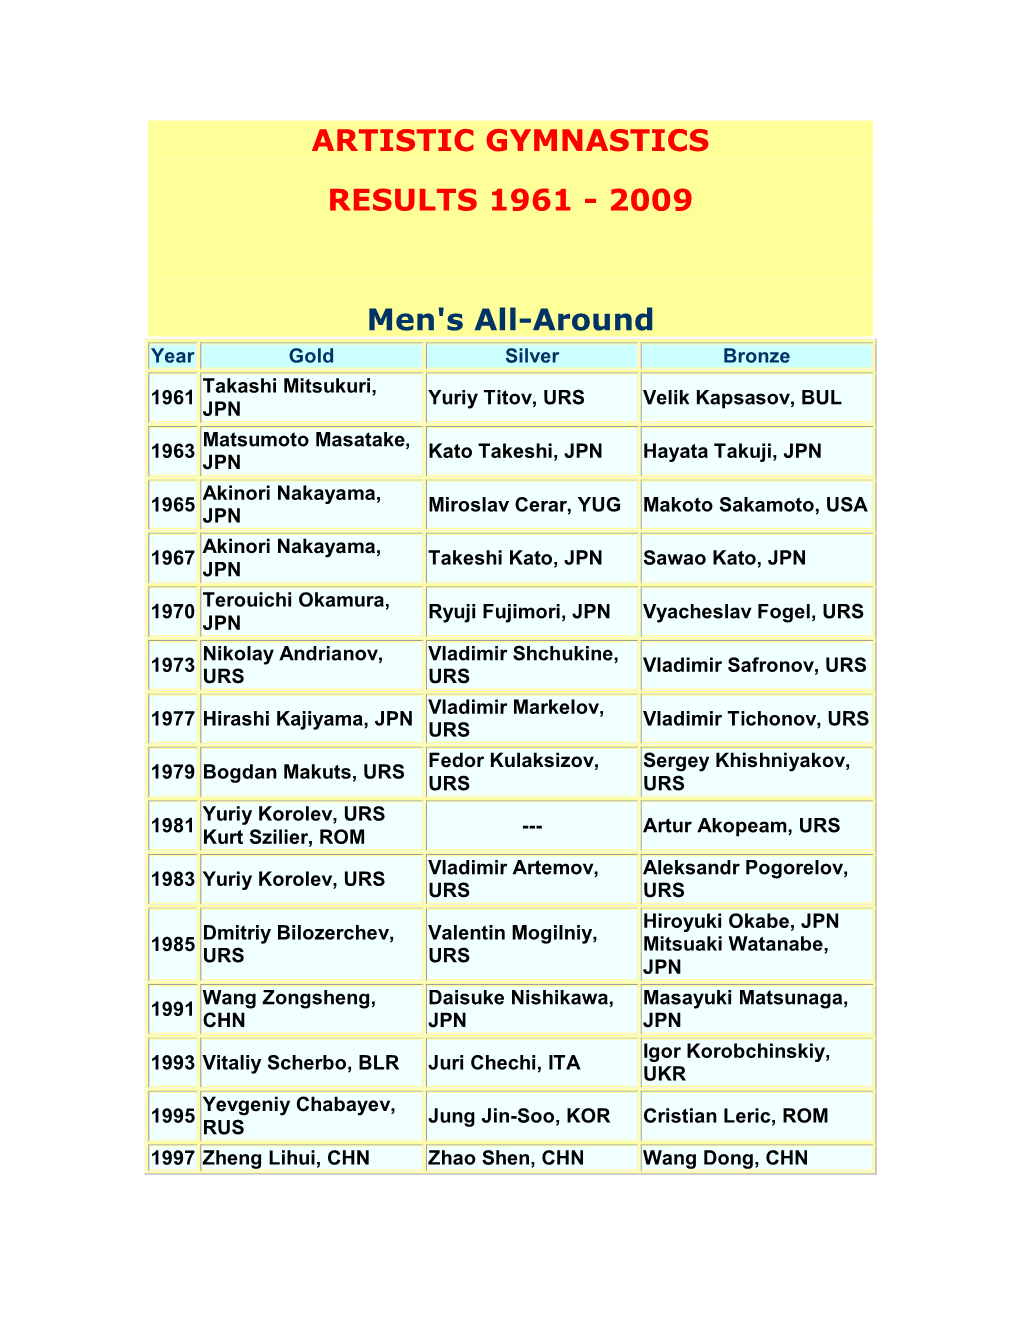 Artistic Gymnastics Results 1961 - 2009